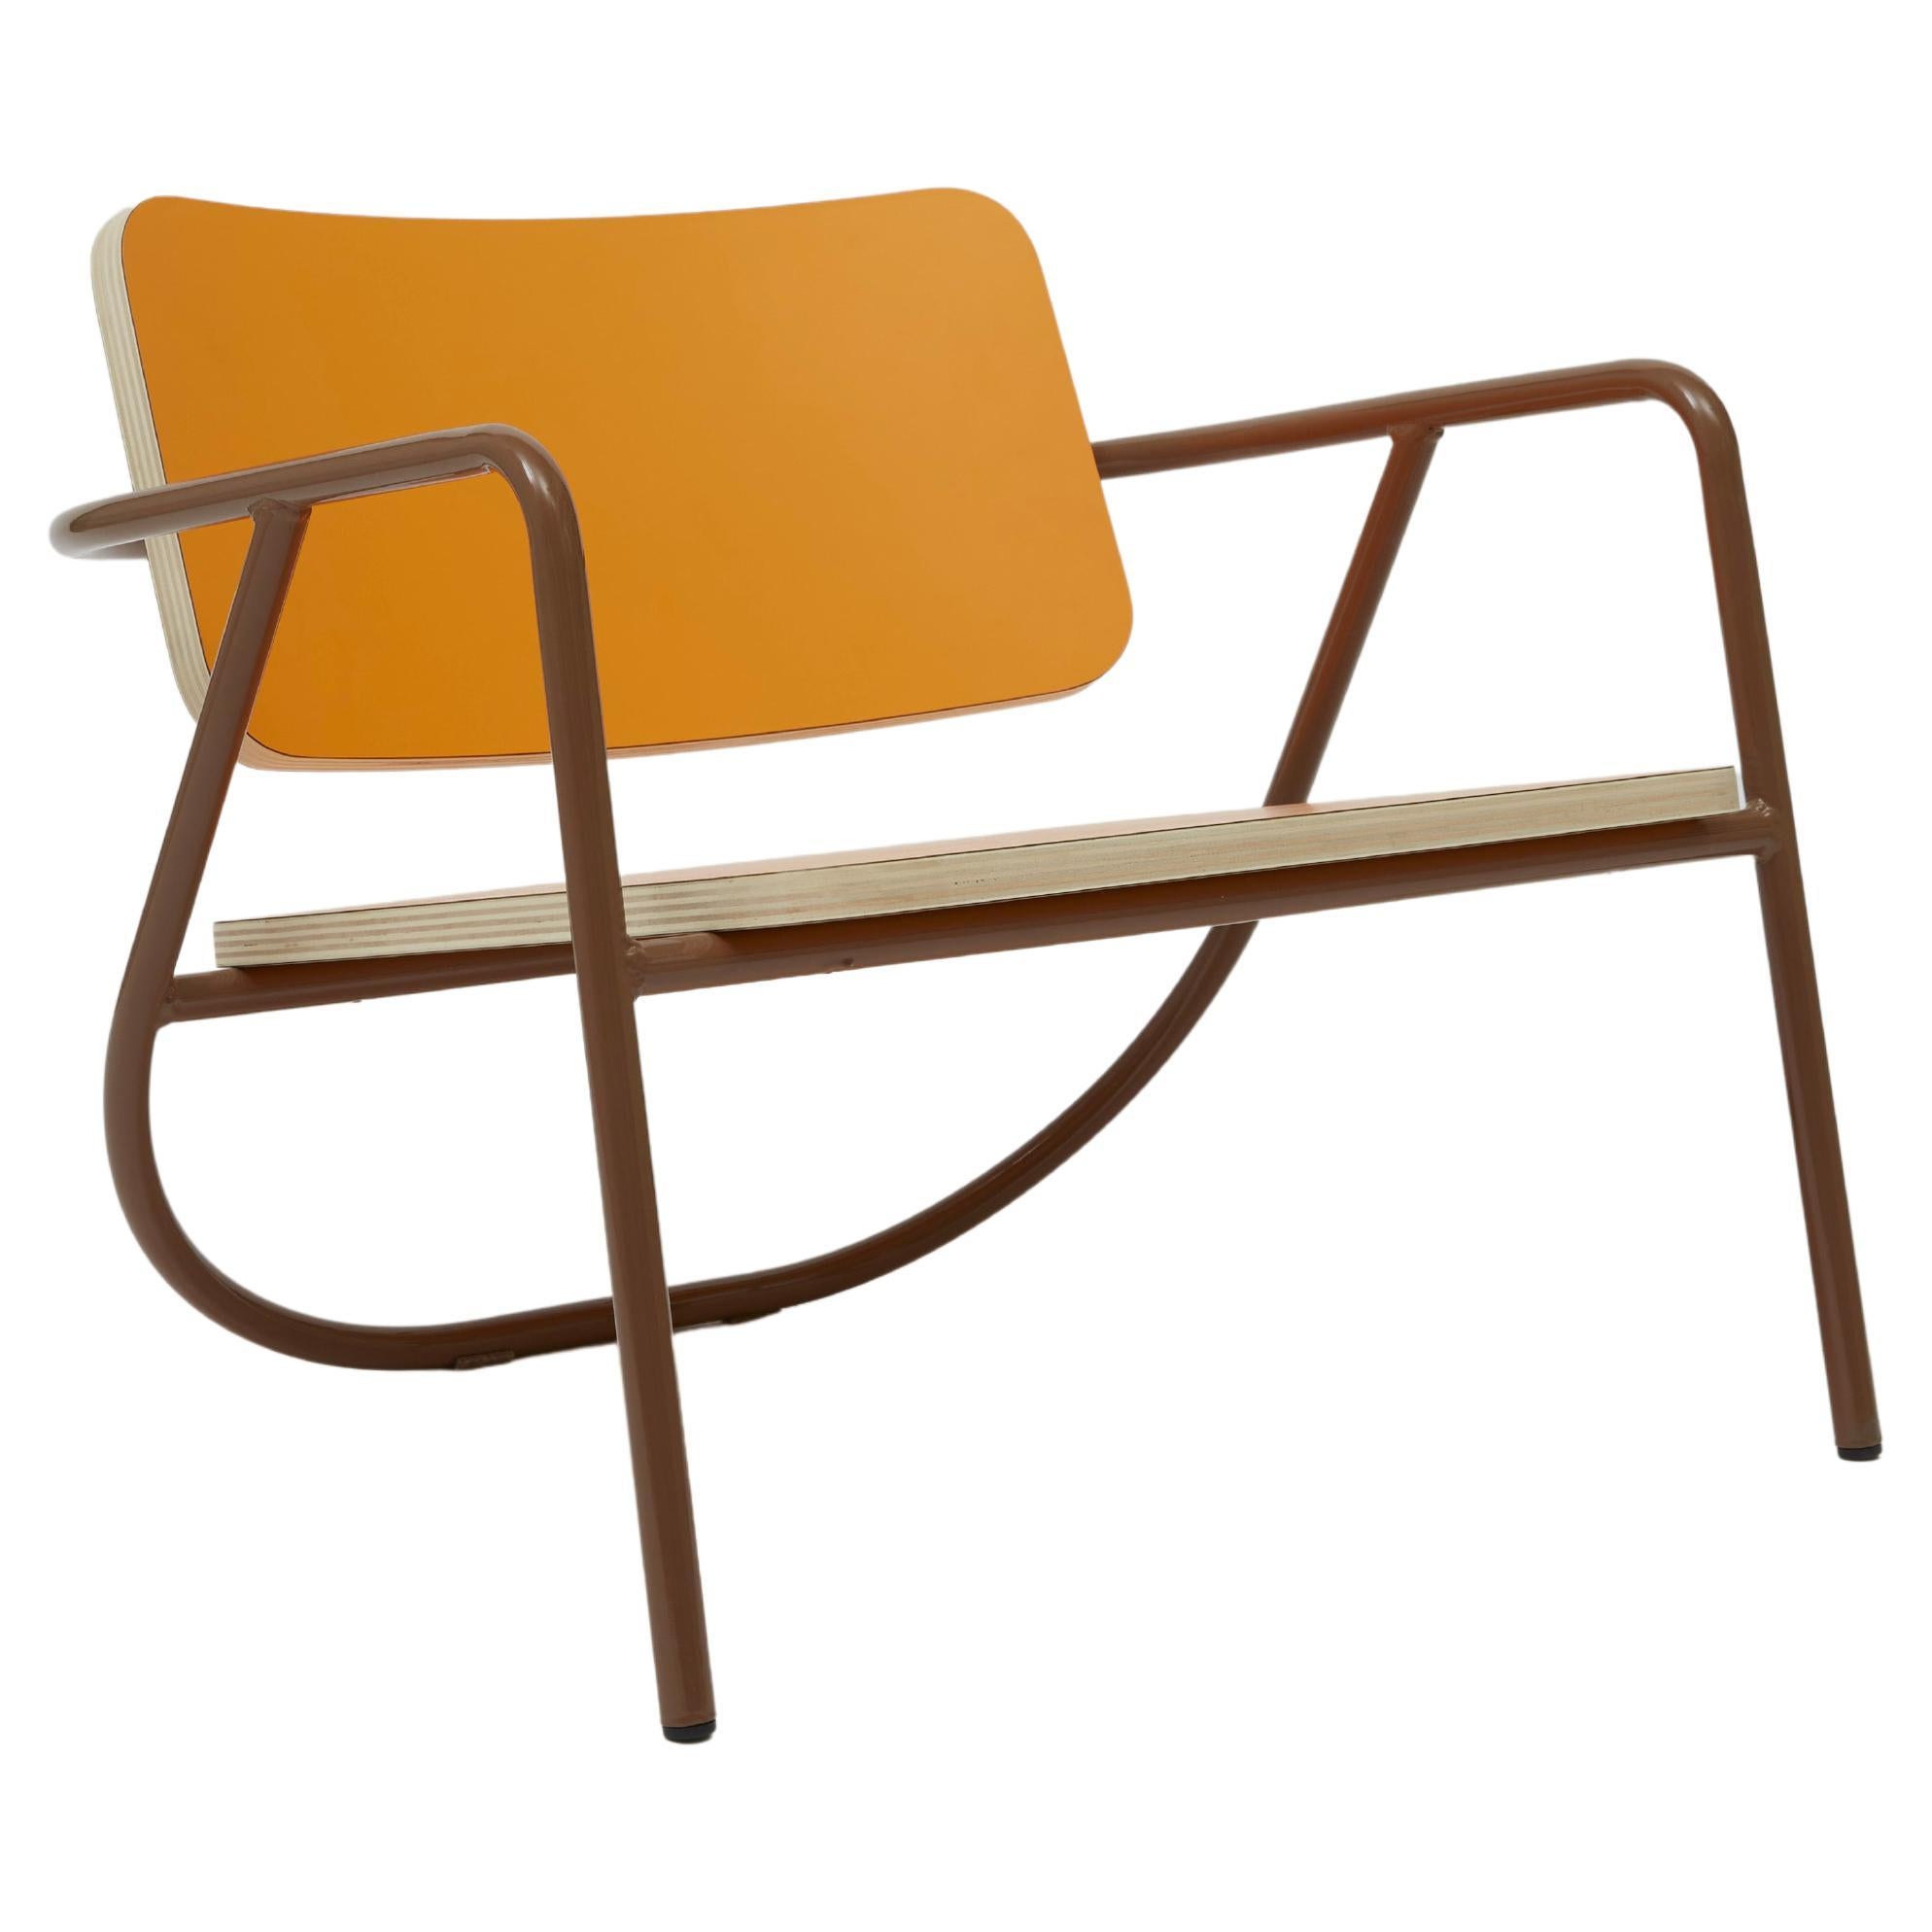 La Misciù Easy Chair, Orange & Brown